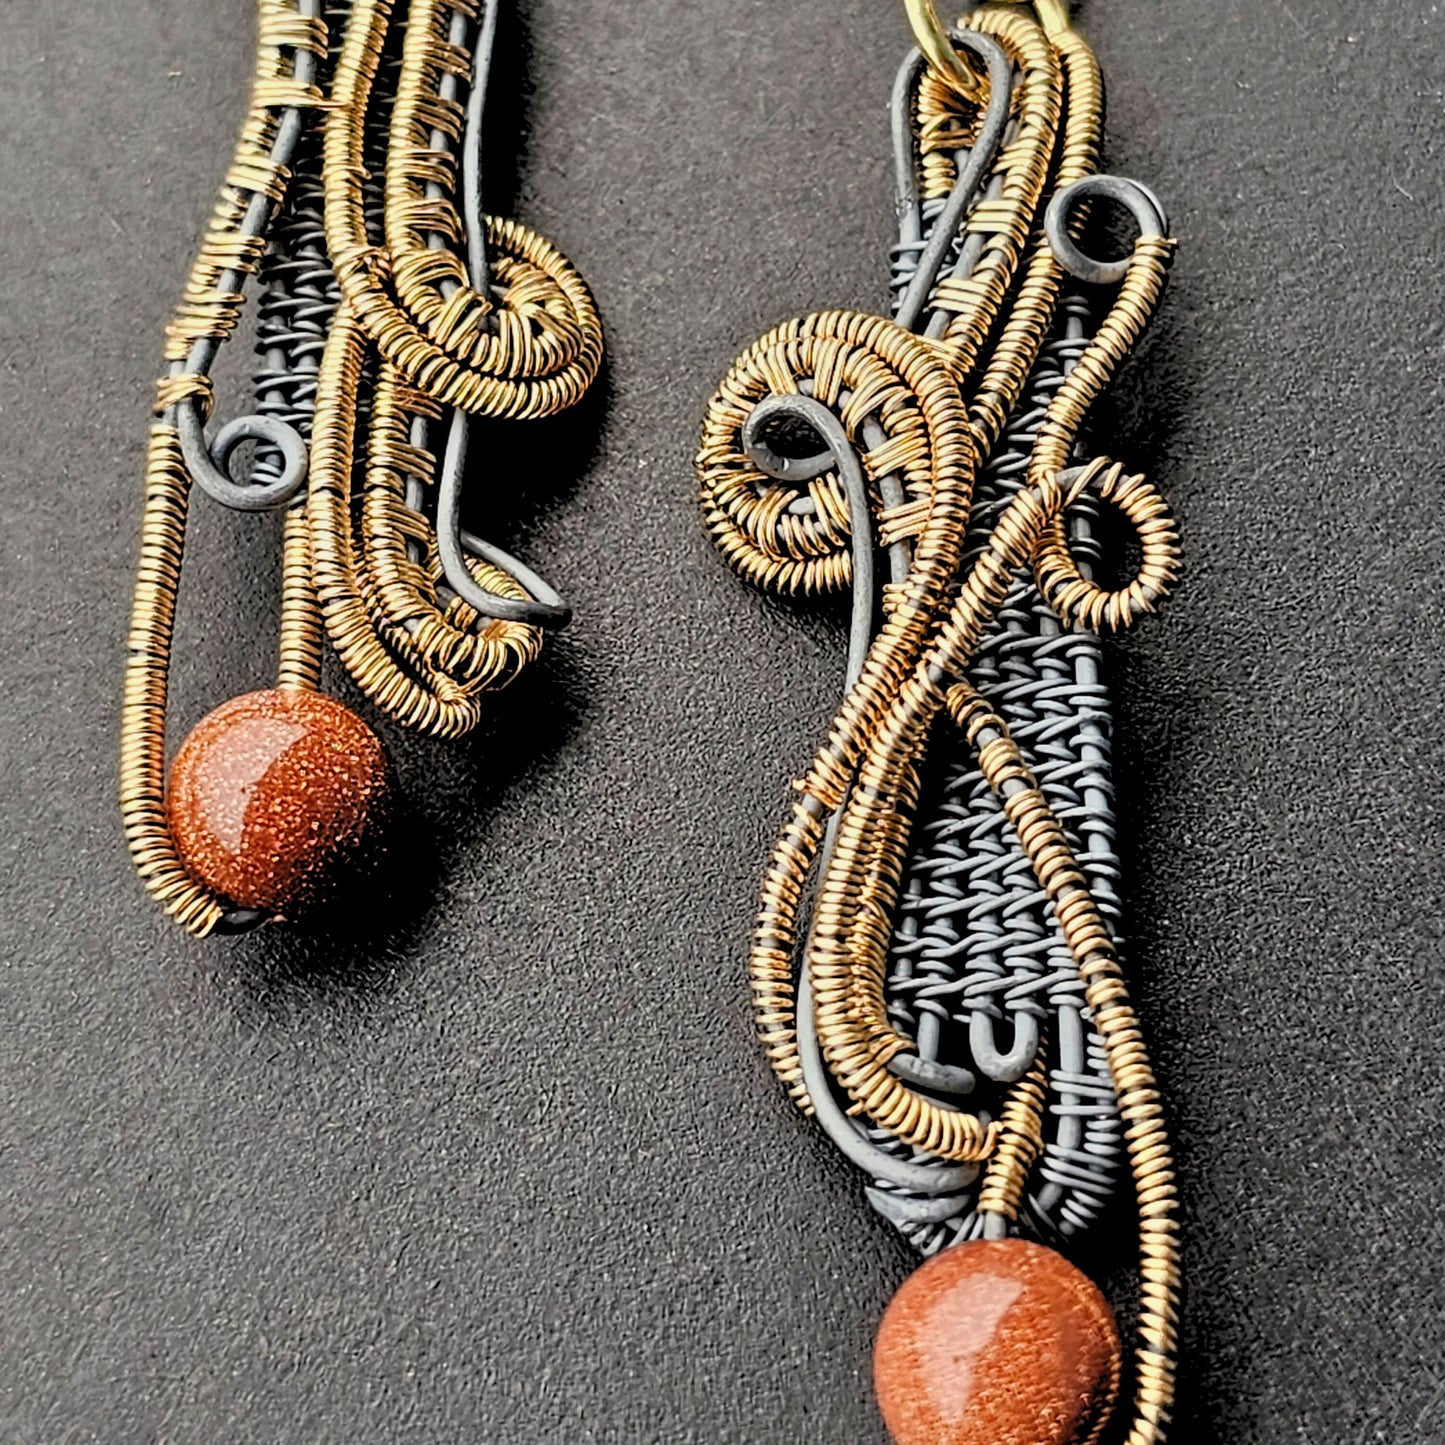 The Winding Path earrings